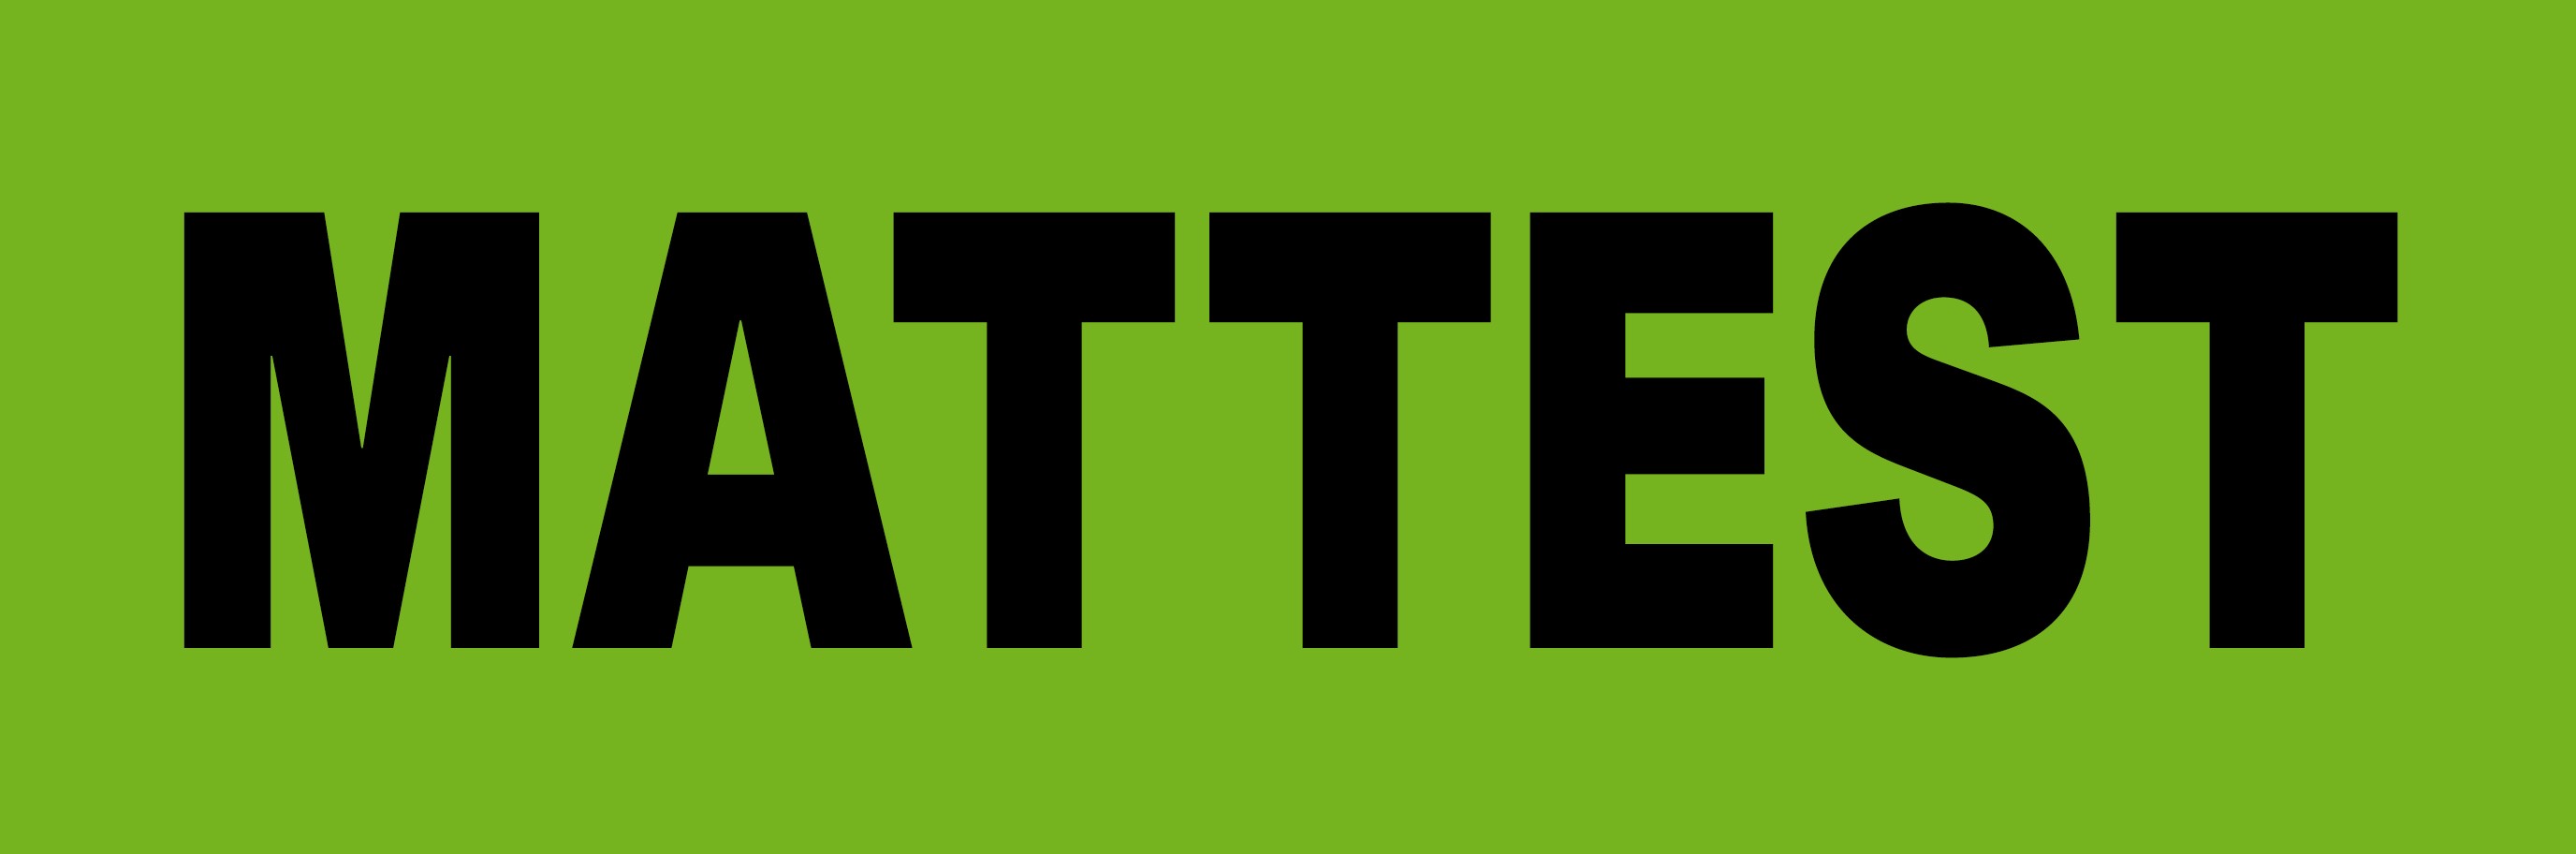 MATTEST logo